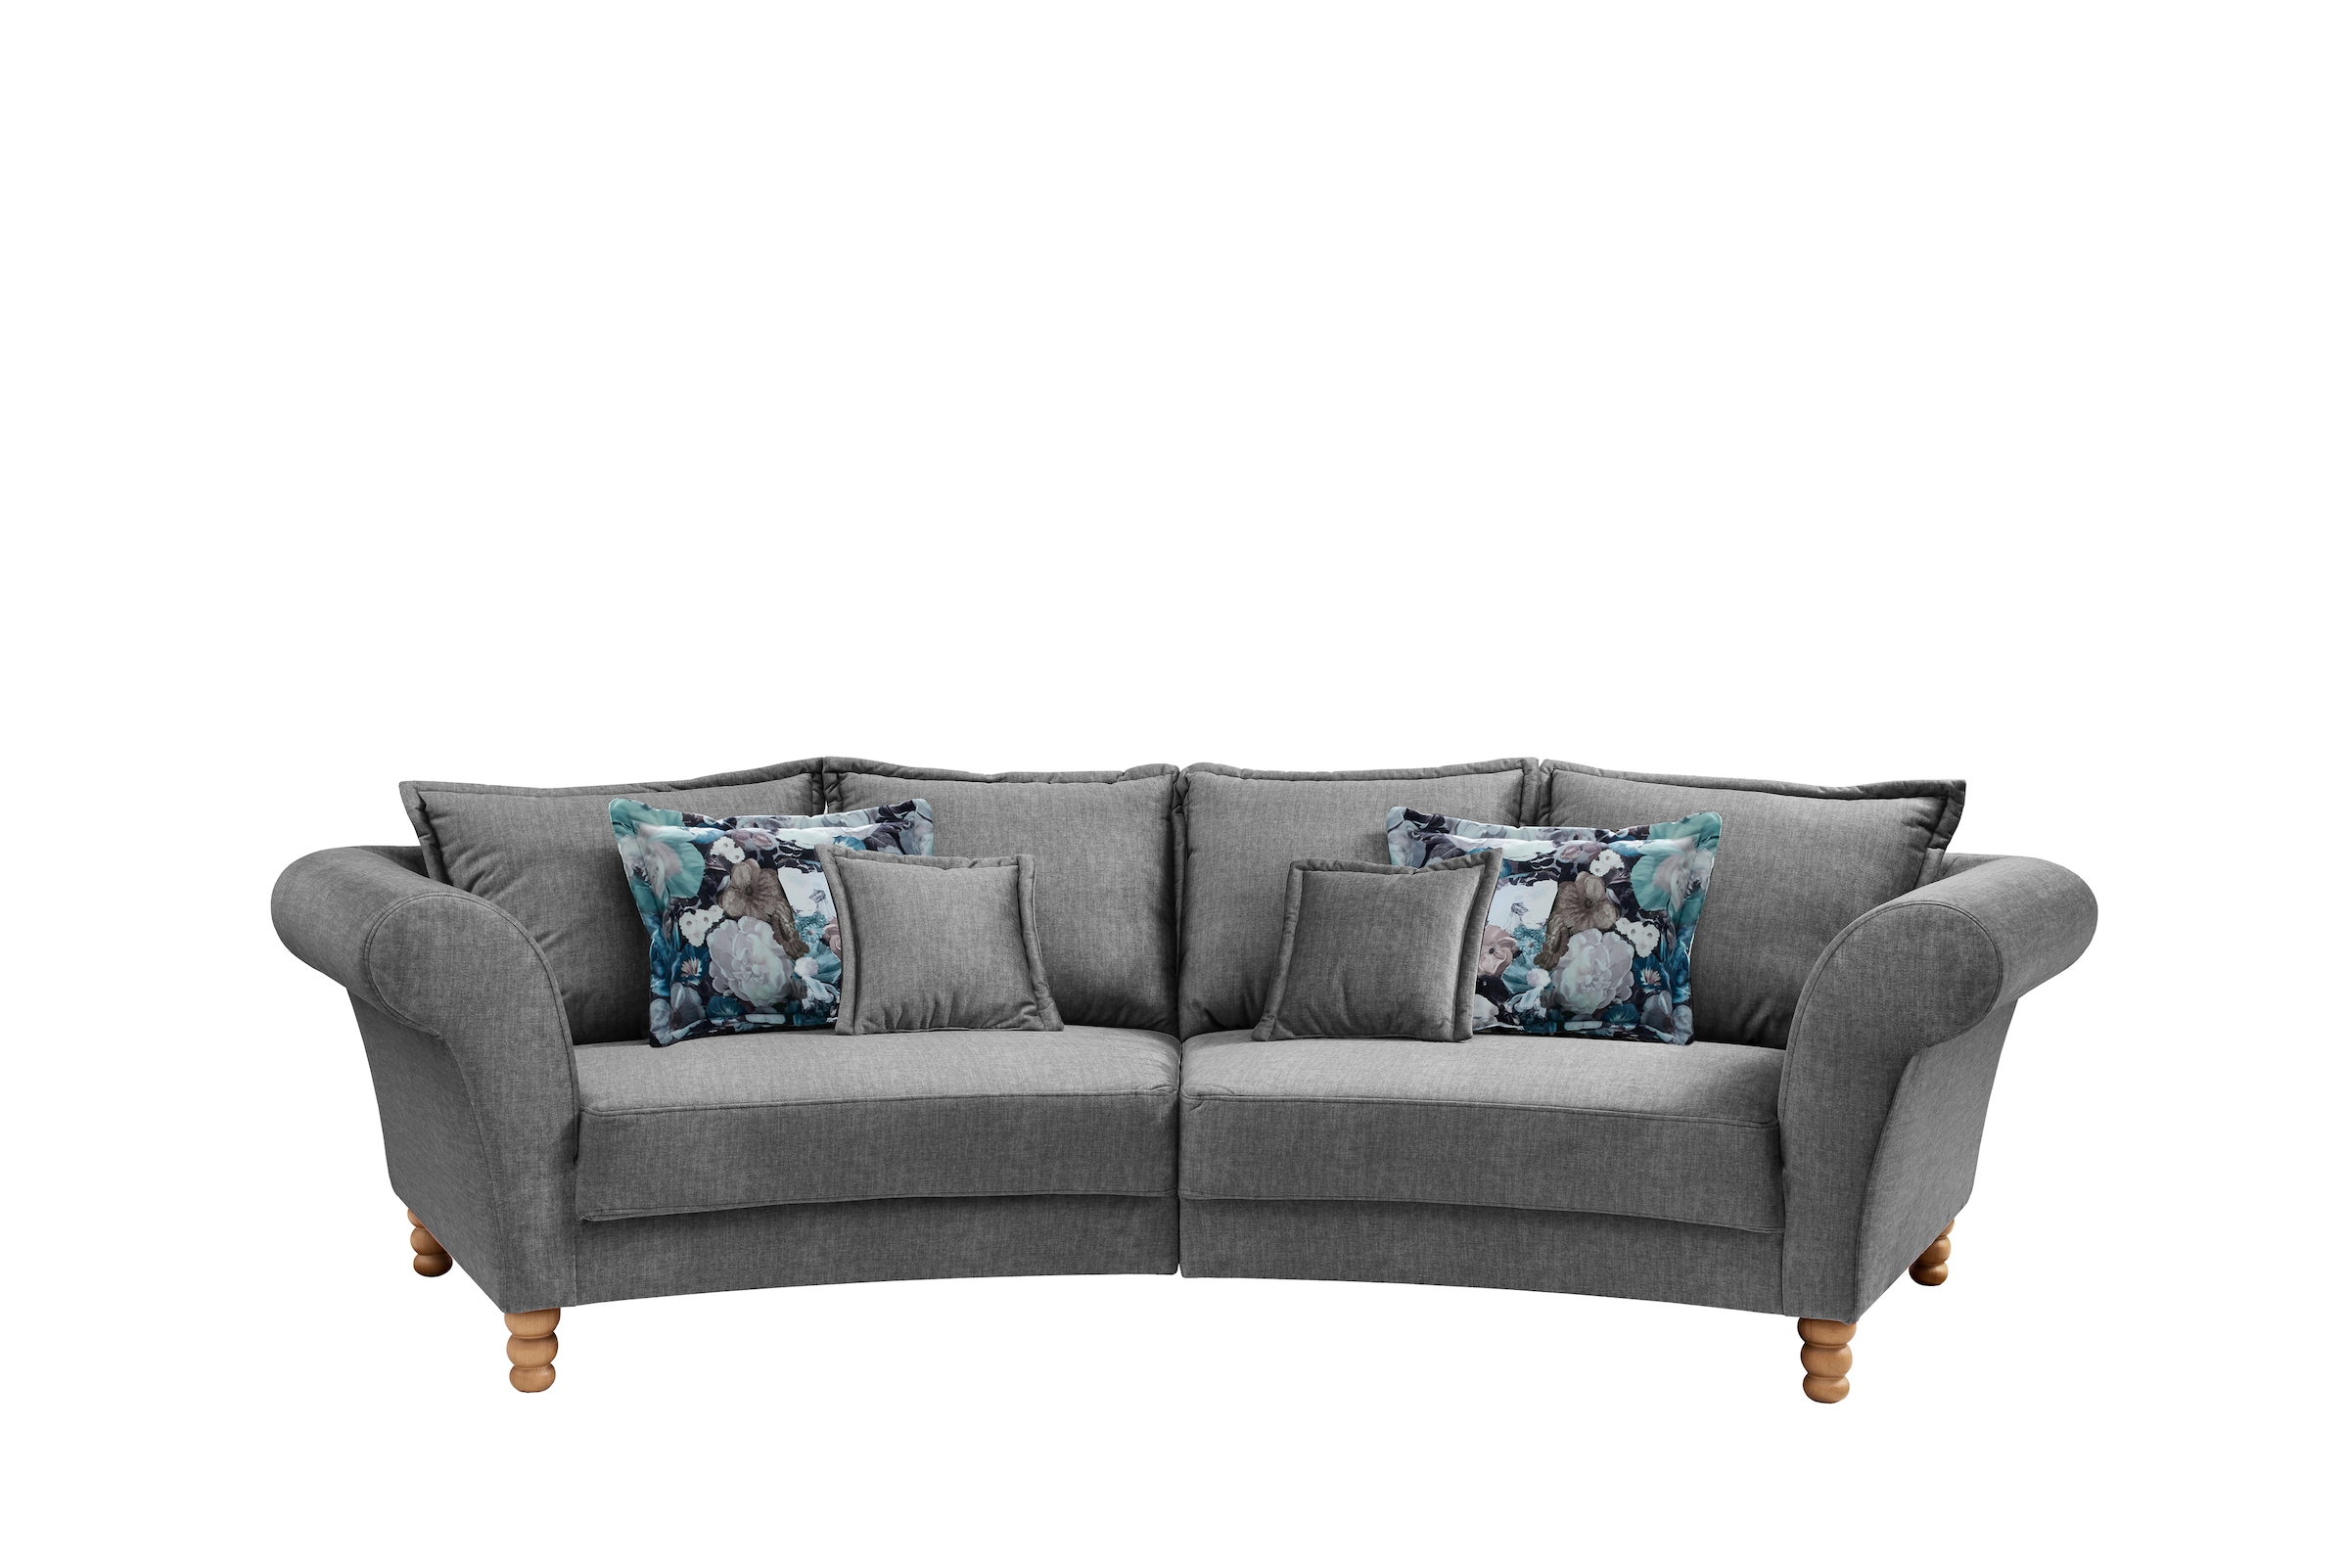 Big-Sofa »Tassilo«